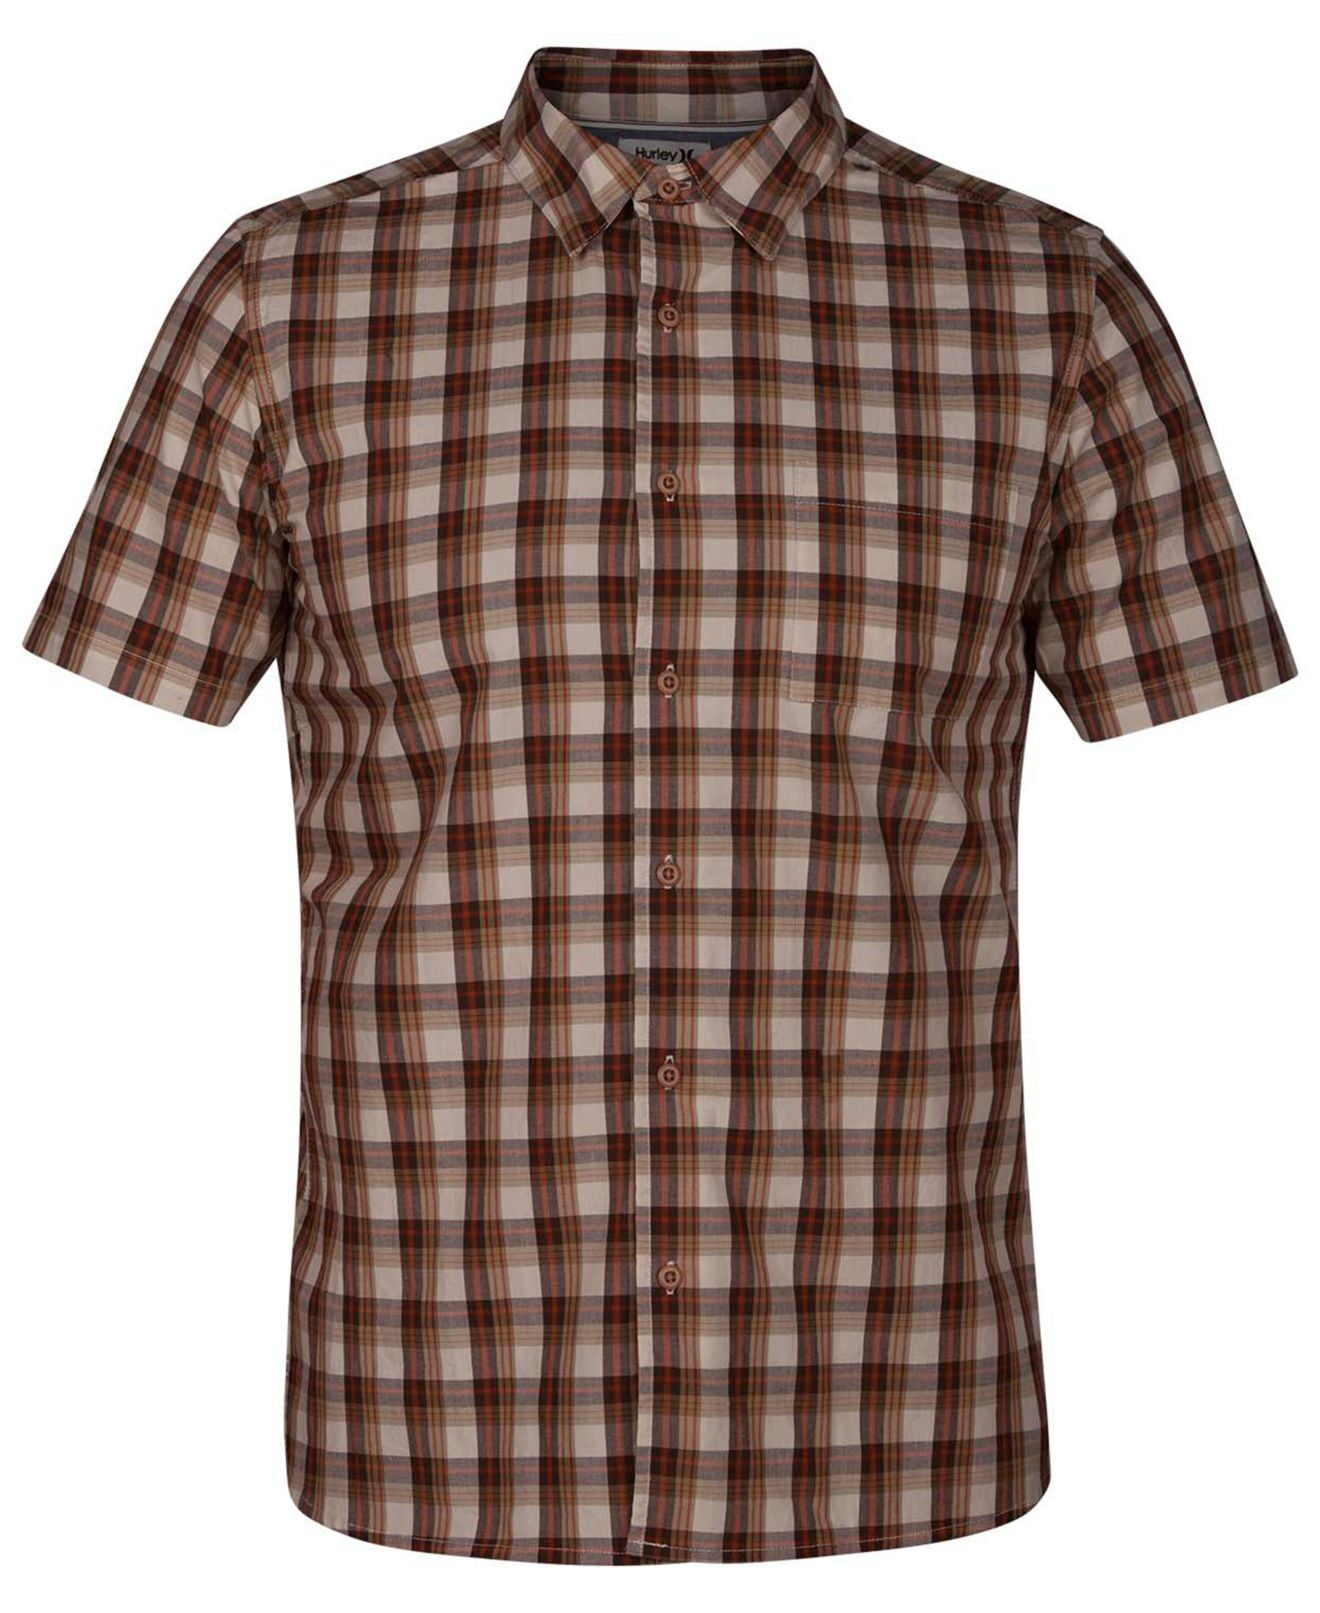 Hurley Casual Shirts - Mens Shirt Charlie Woven Plaid Button Down ...